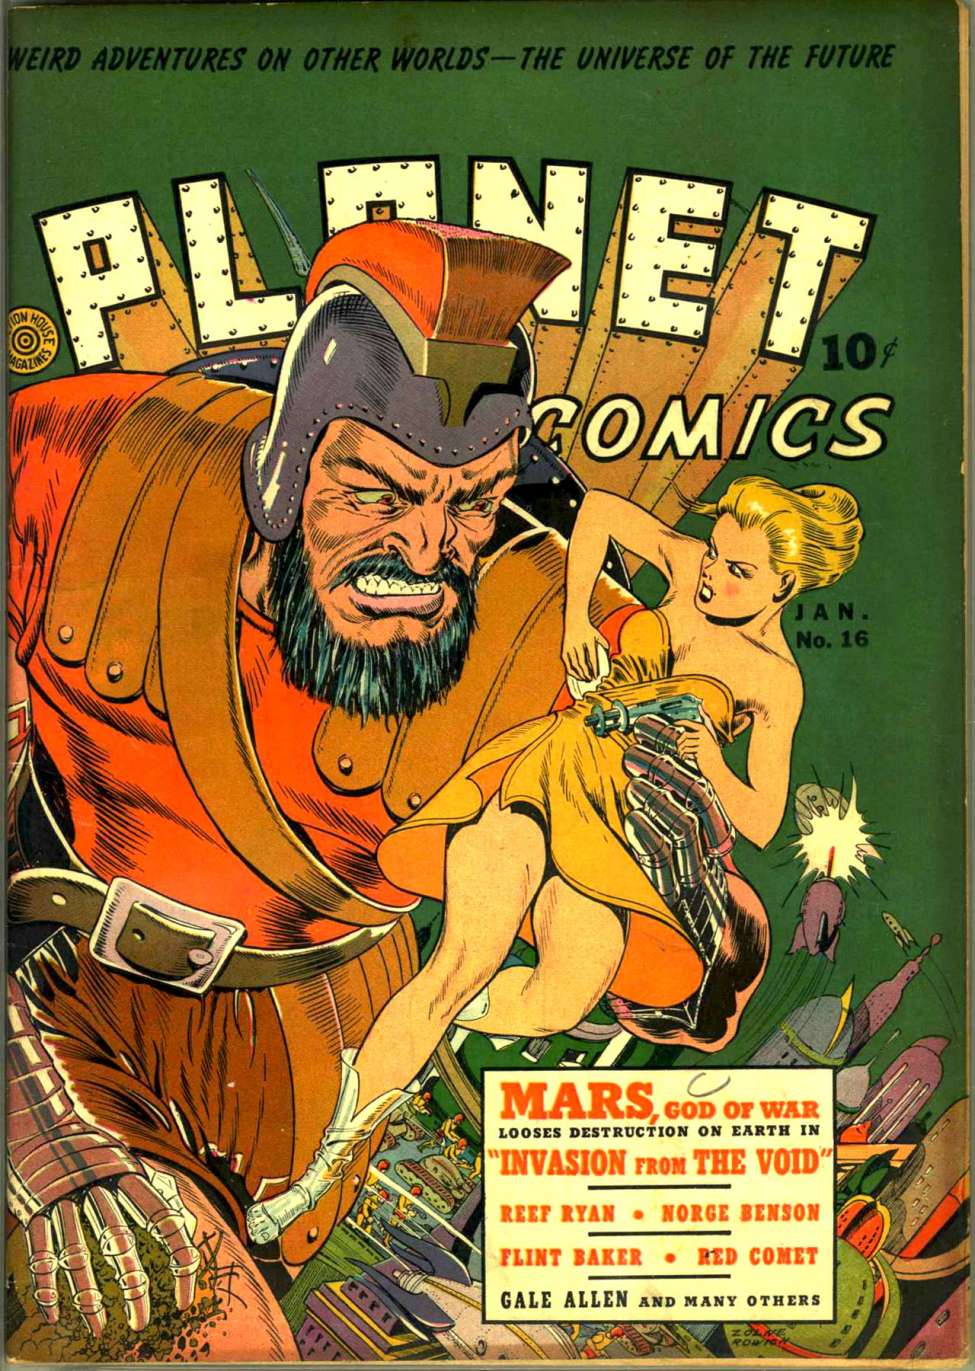 Comic Book Cover For Planet Comics 16 (alt) - Version 2